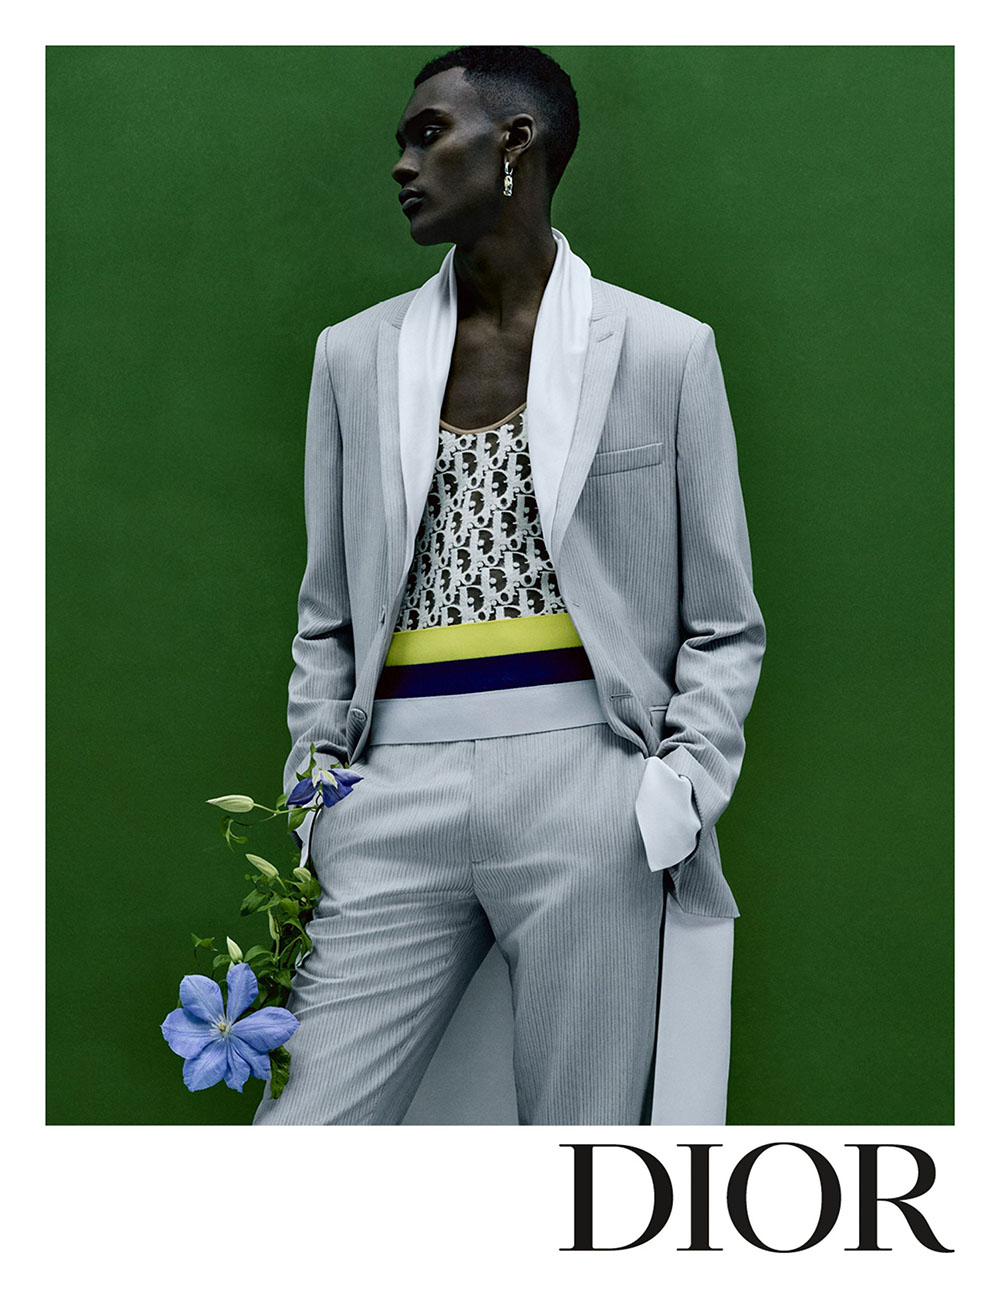 Dior Men Spring Summer 2021 Campaign